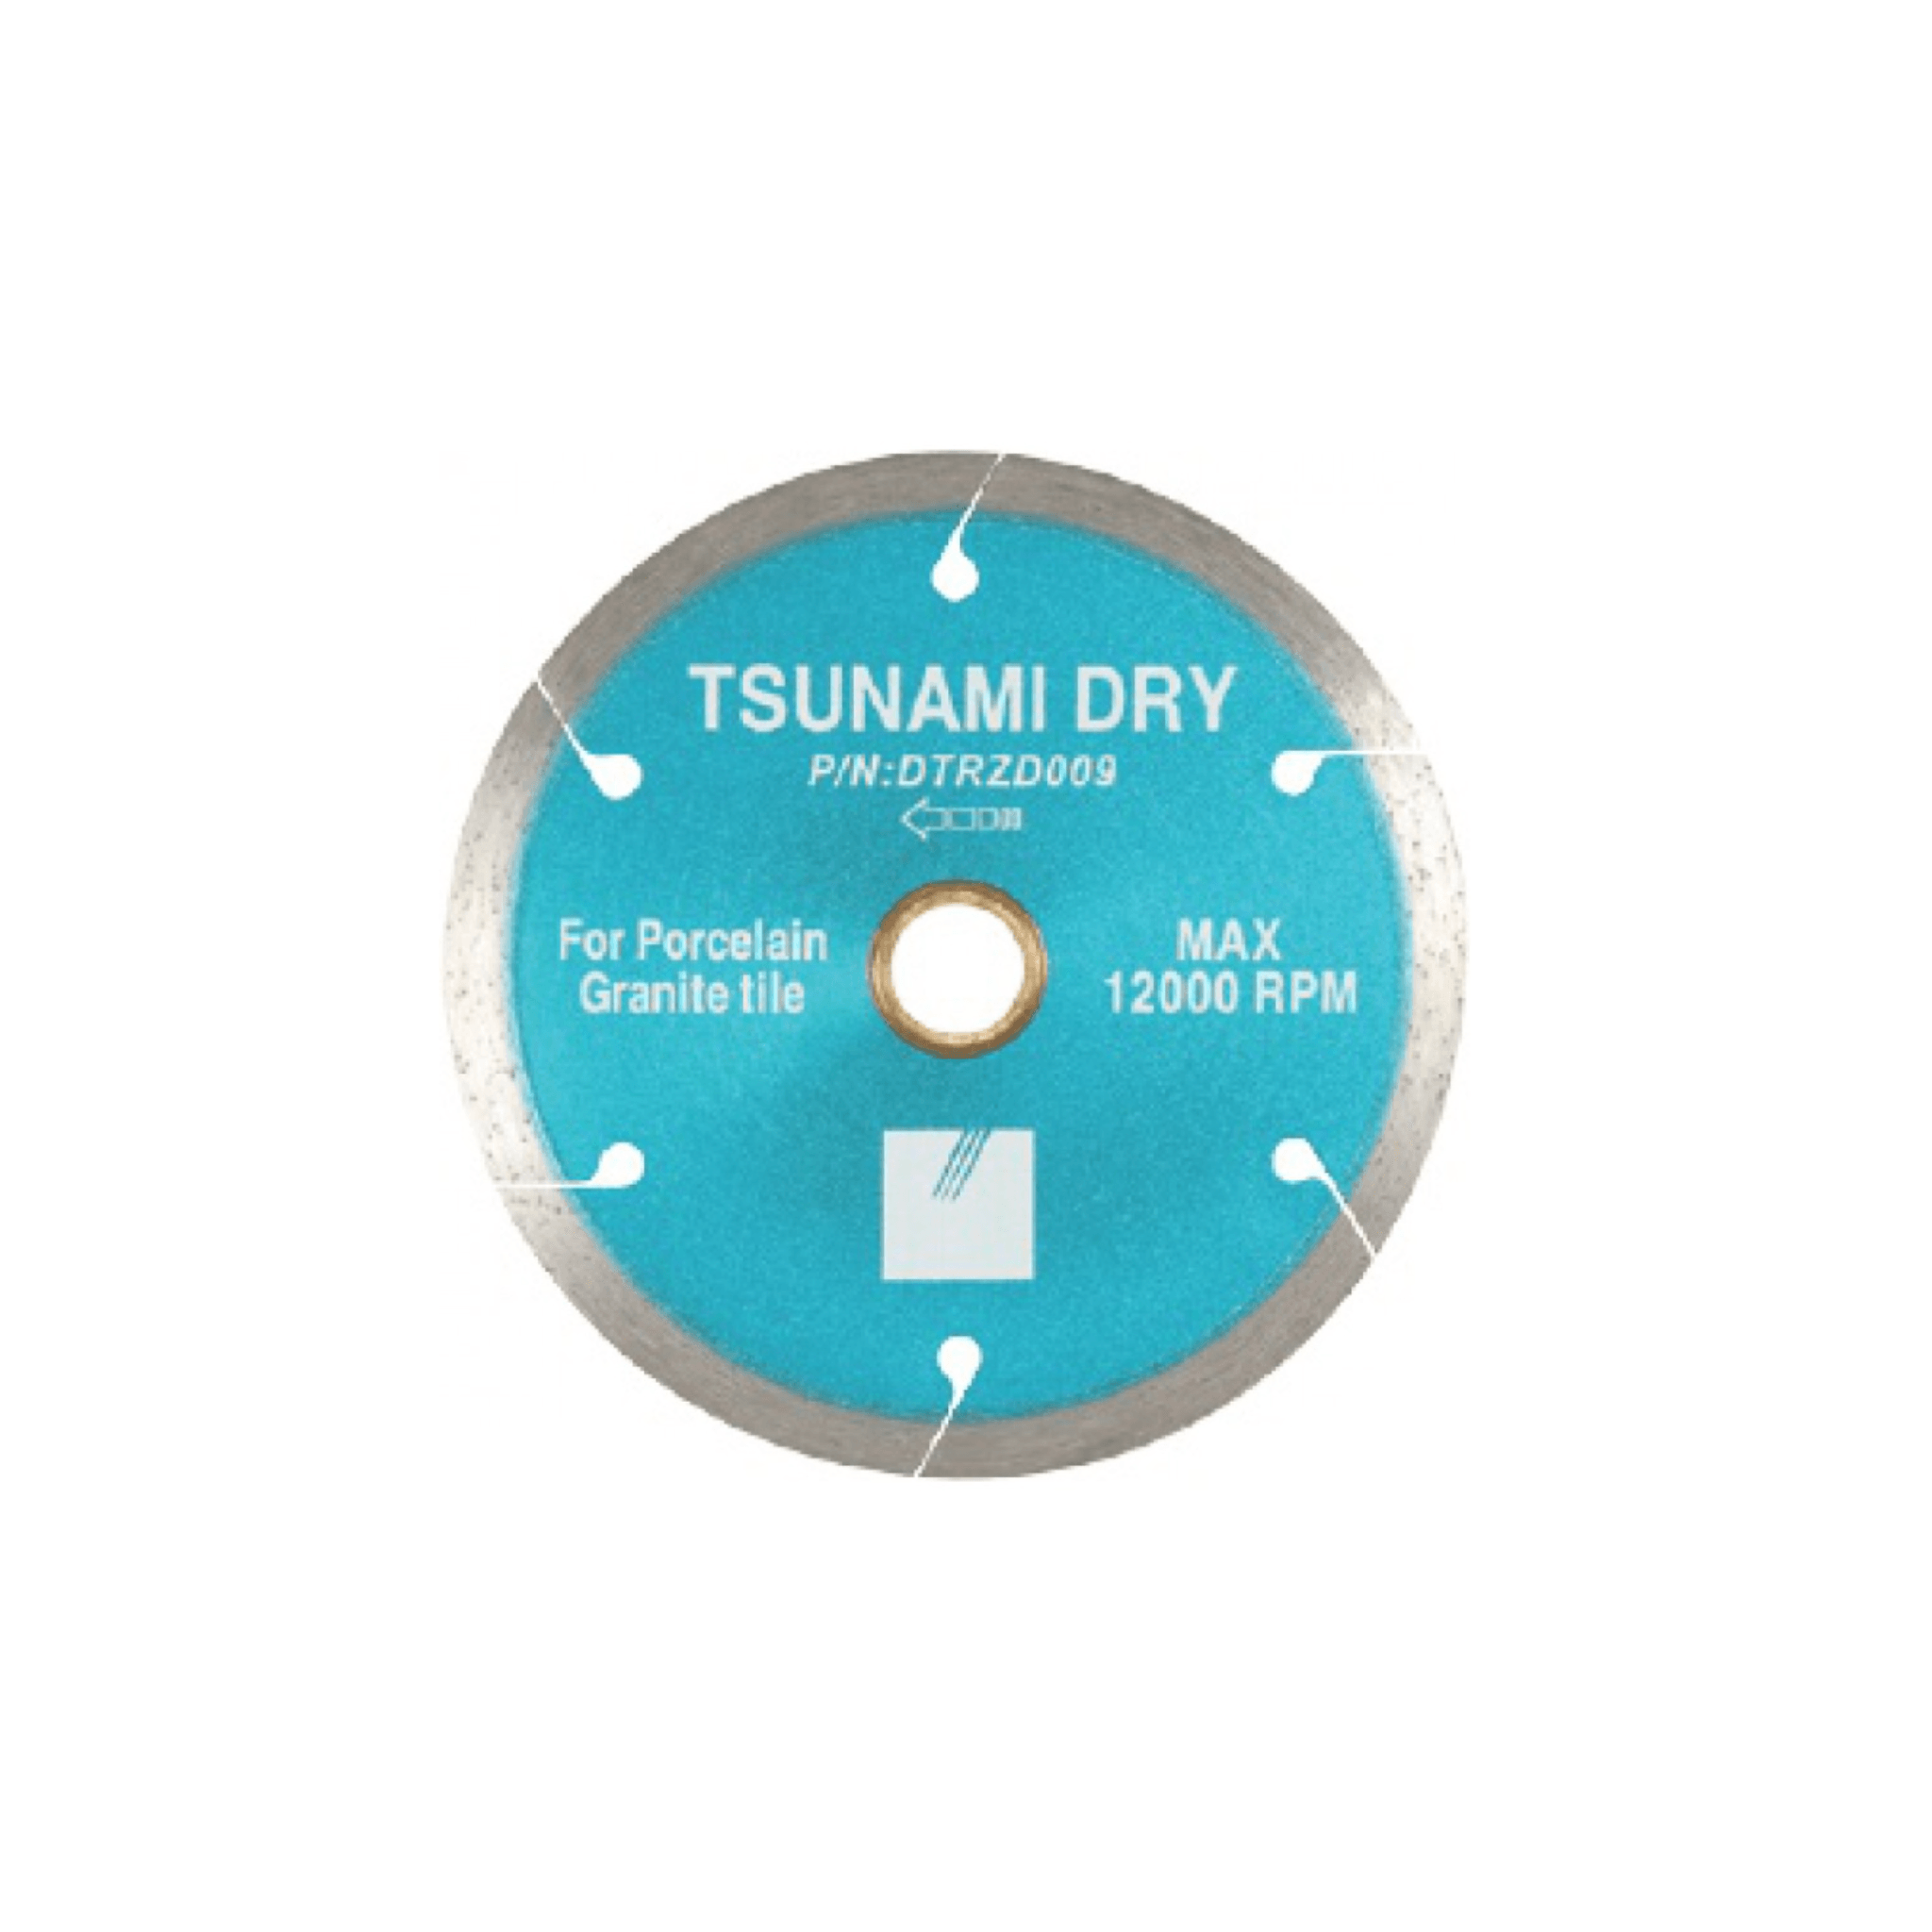 Disco Tsunami Dry 4.5" - Direct Stone Tool Supply, Inc